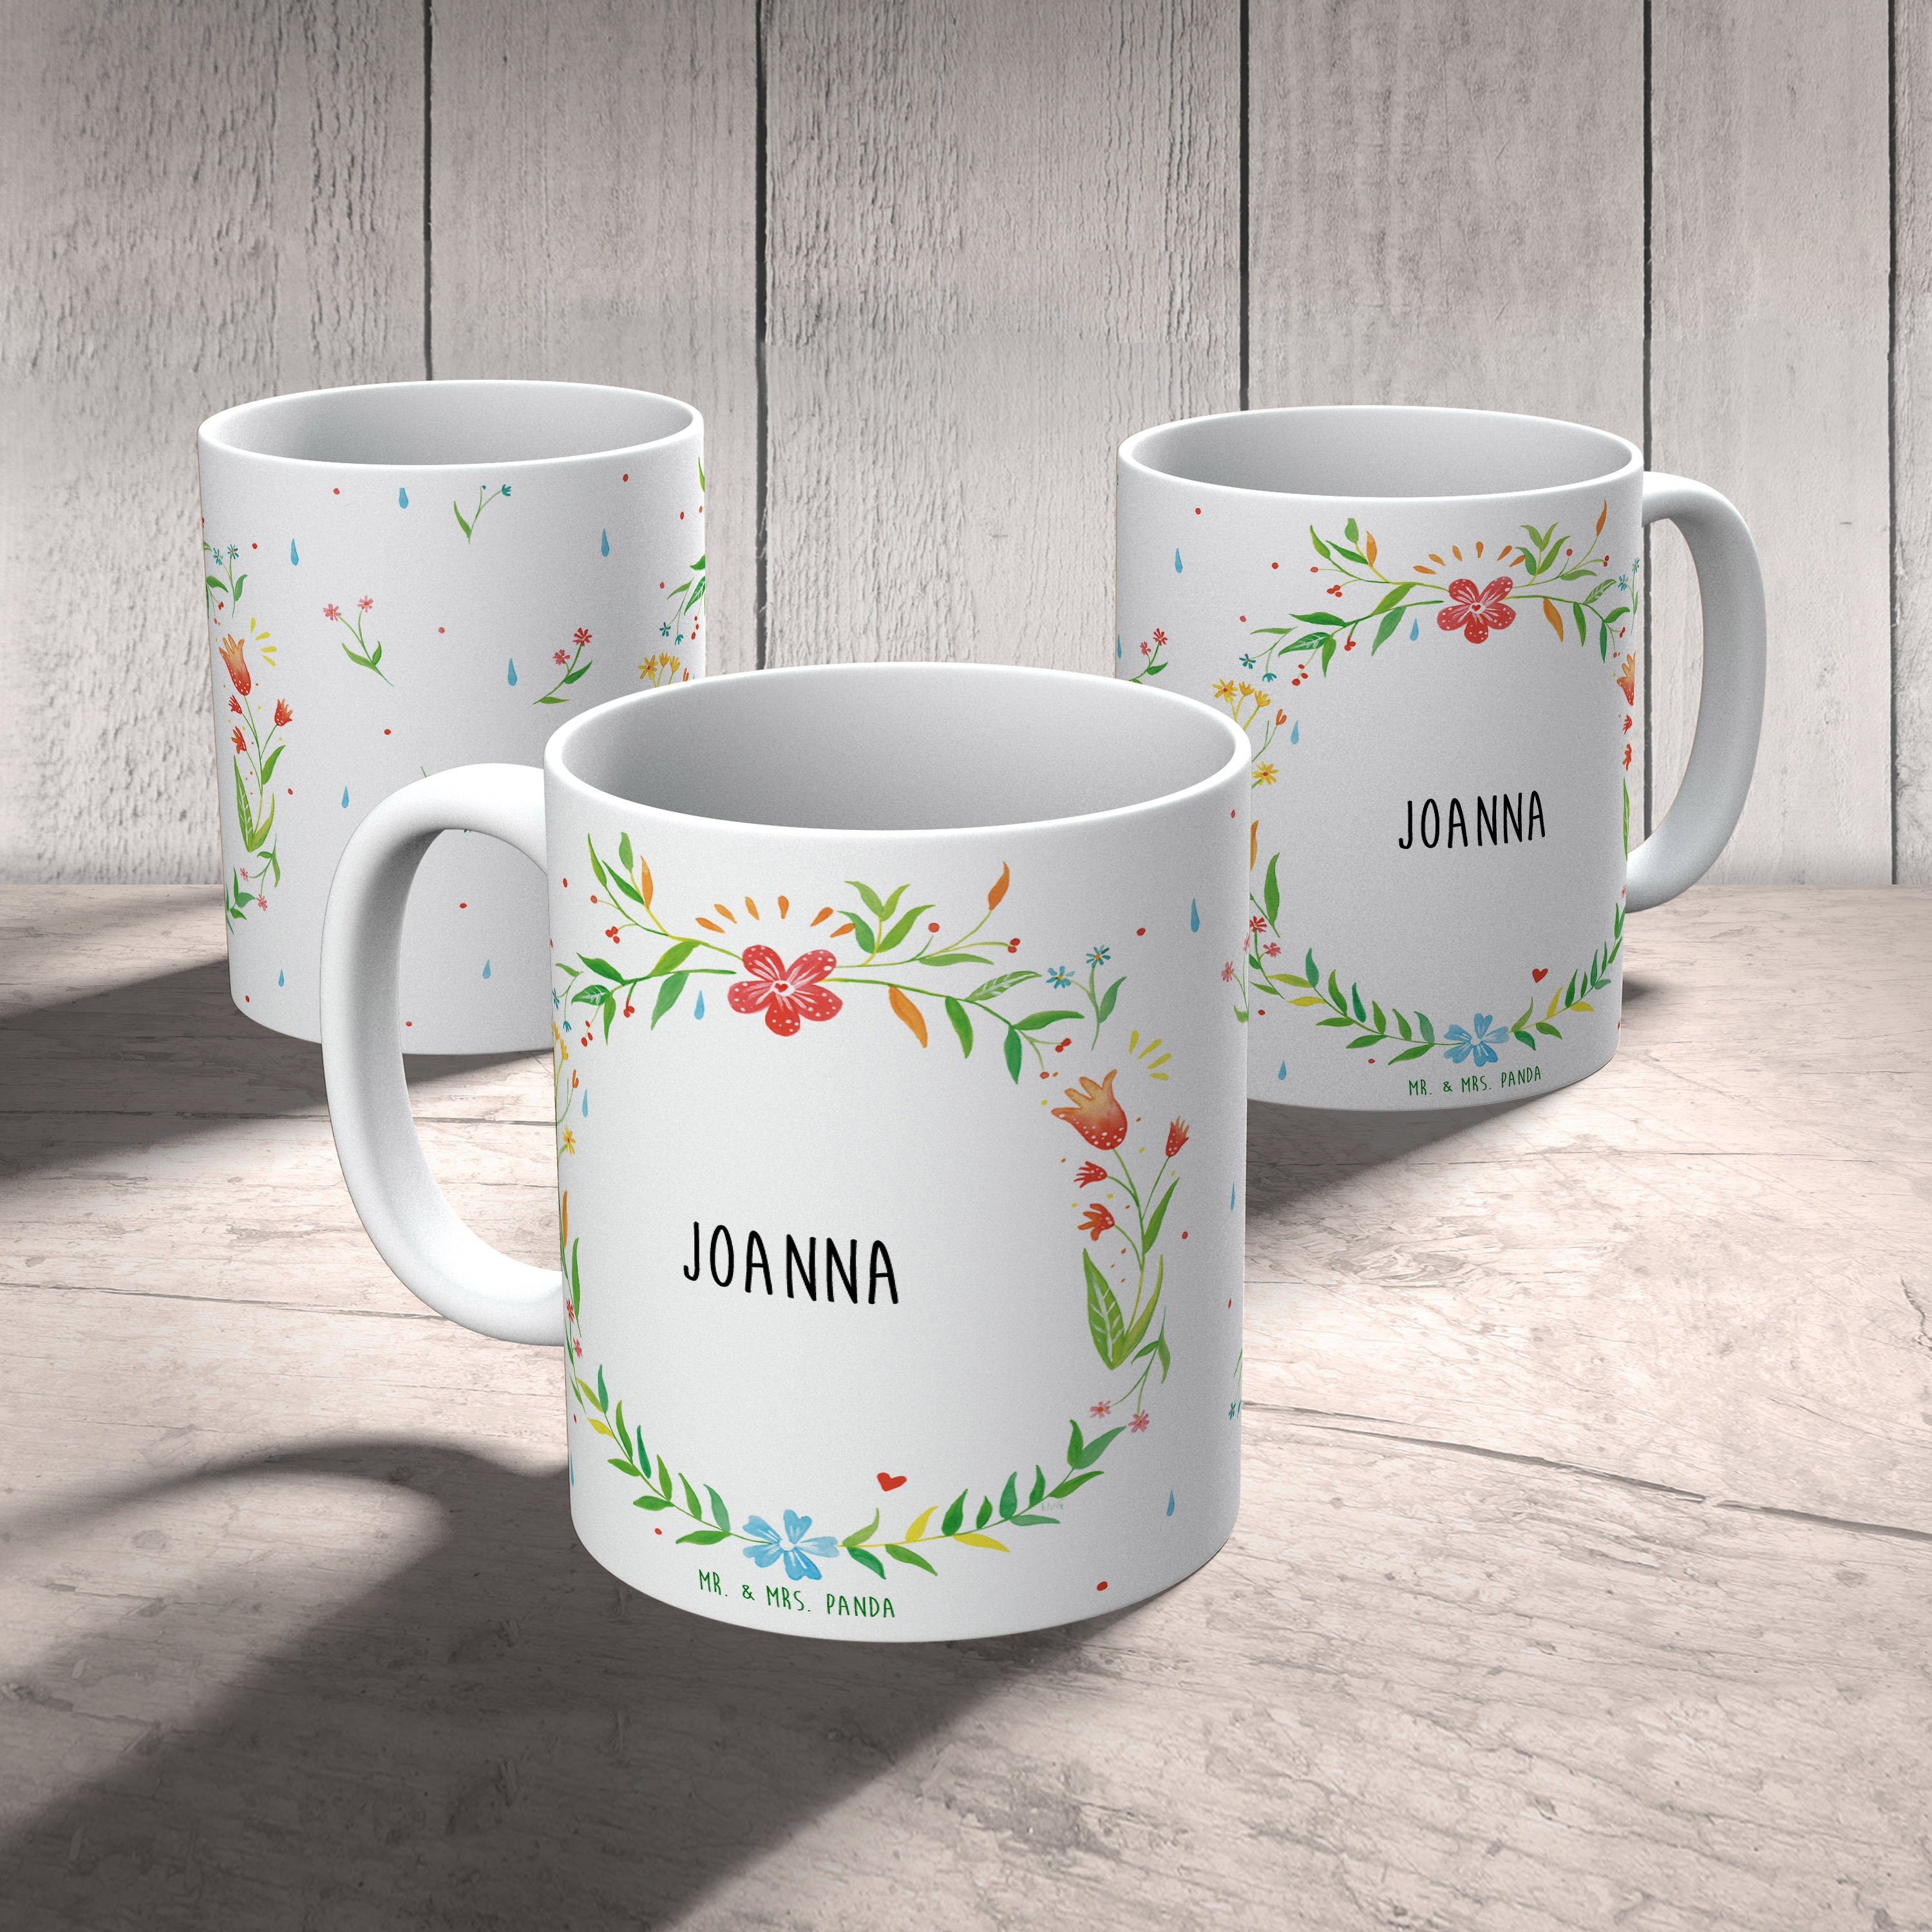 Mr. & Mrs. Tasse Tass, Kaffeebecher, Panda Büro Keramik Joanna Geschenk, - Kaffeetasse, Tasse, Tasse